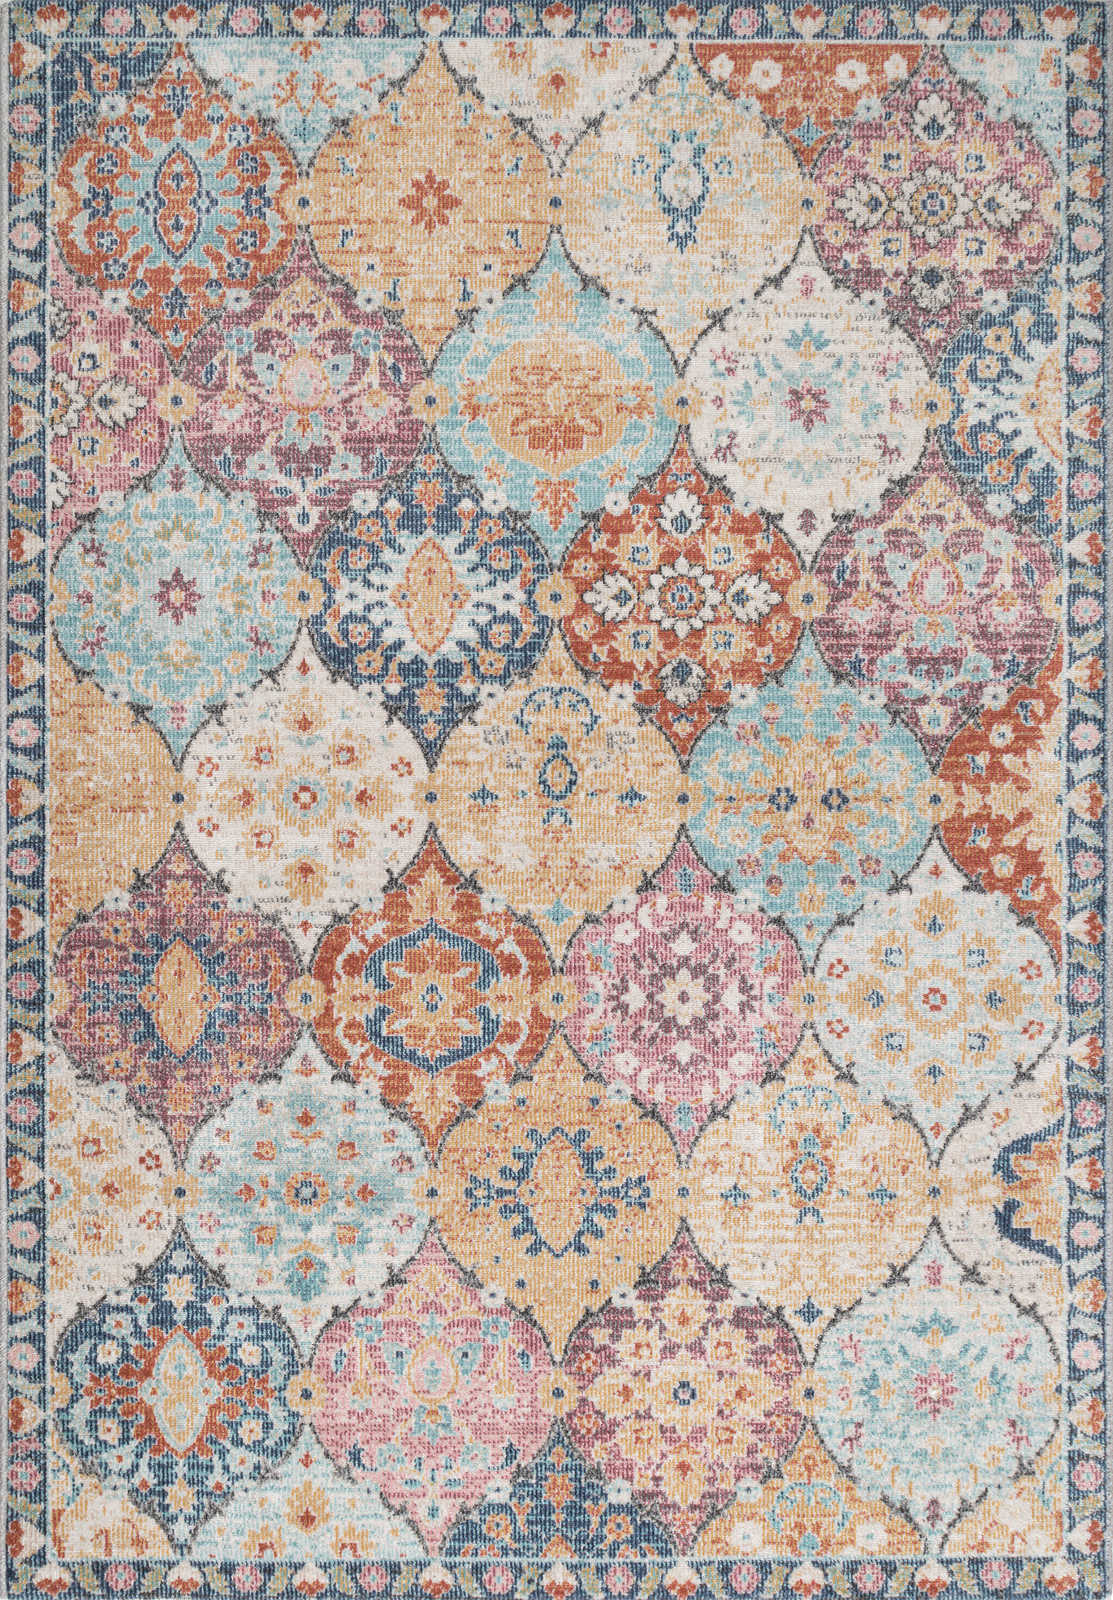             Bunter Outdoor Teppich aus Flachgewebe – 170 x 120 cm
        